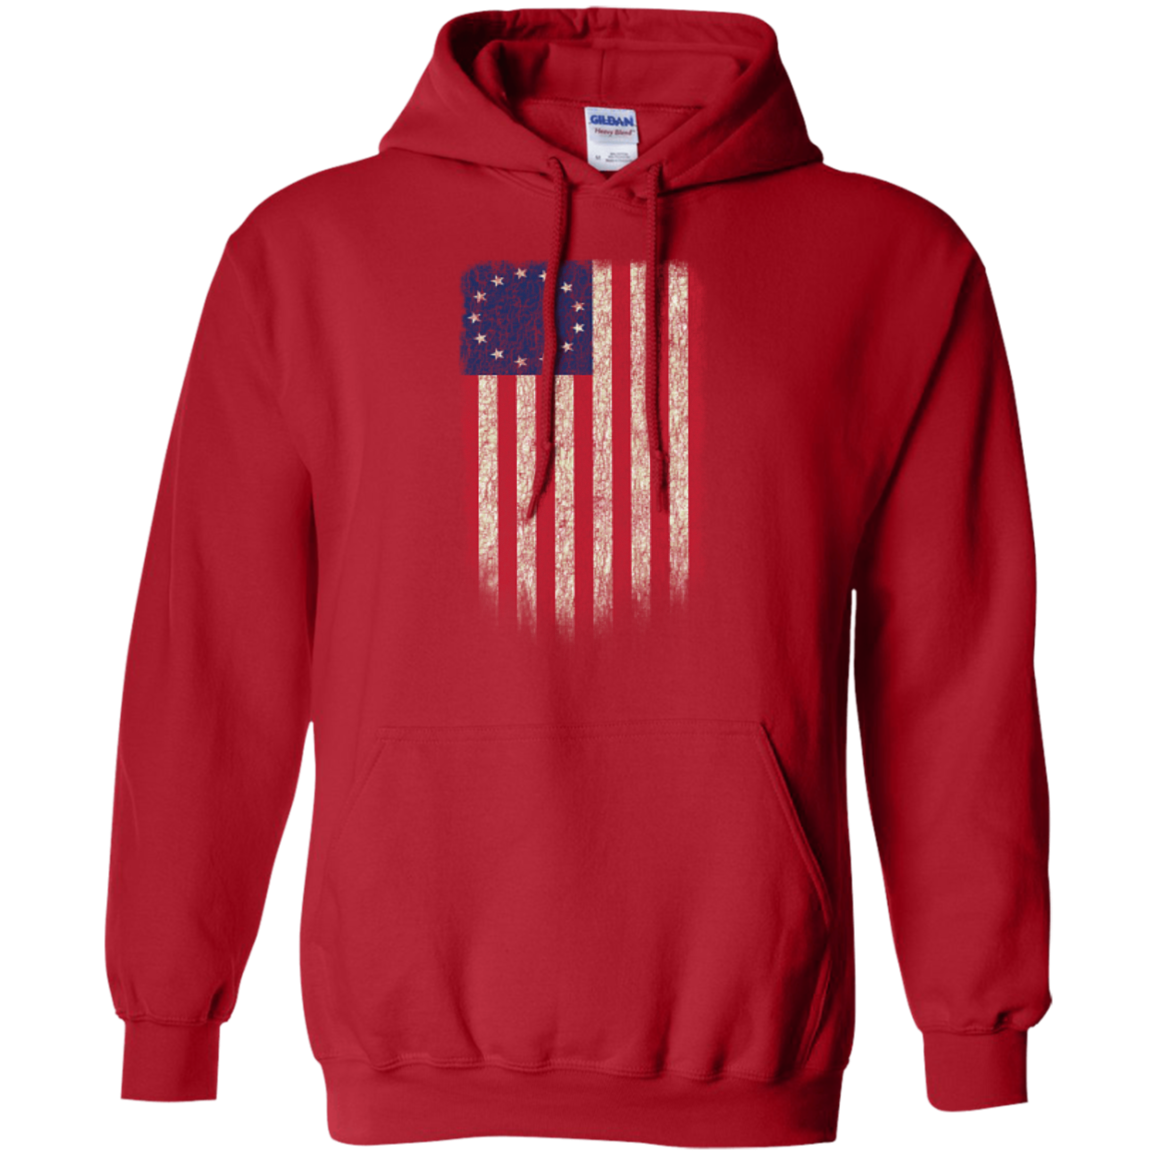 Betsy Ross Flag 13 Colonies Pullover Hoodie 8 oz. - Trumpshop.net